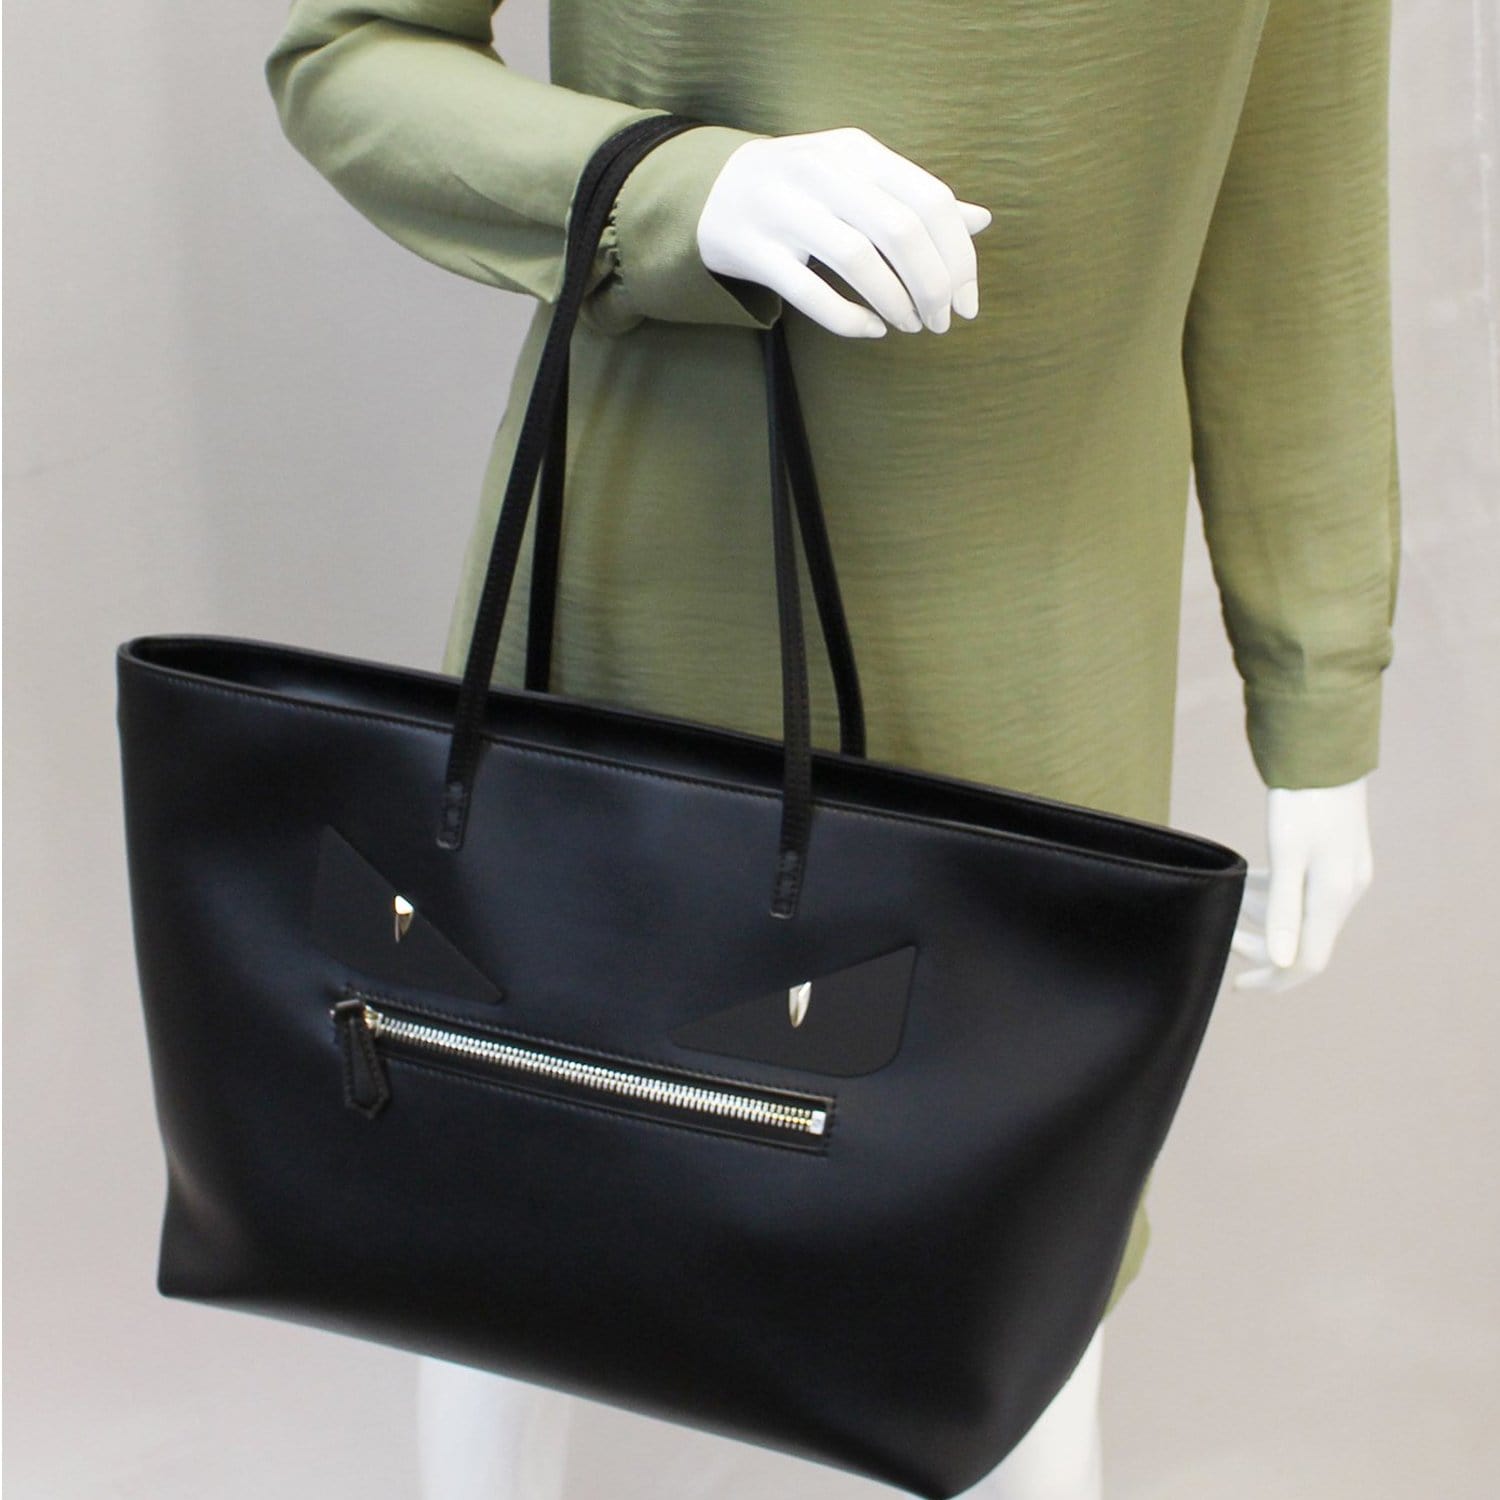 Roll bag leather bag Fendi Black in Leather - 34629839